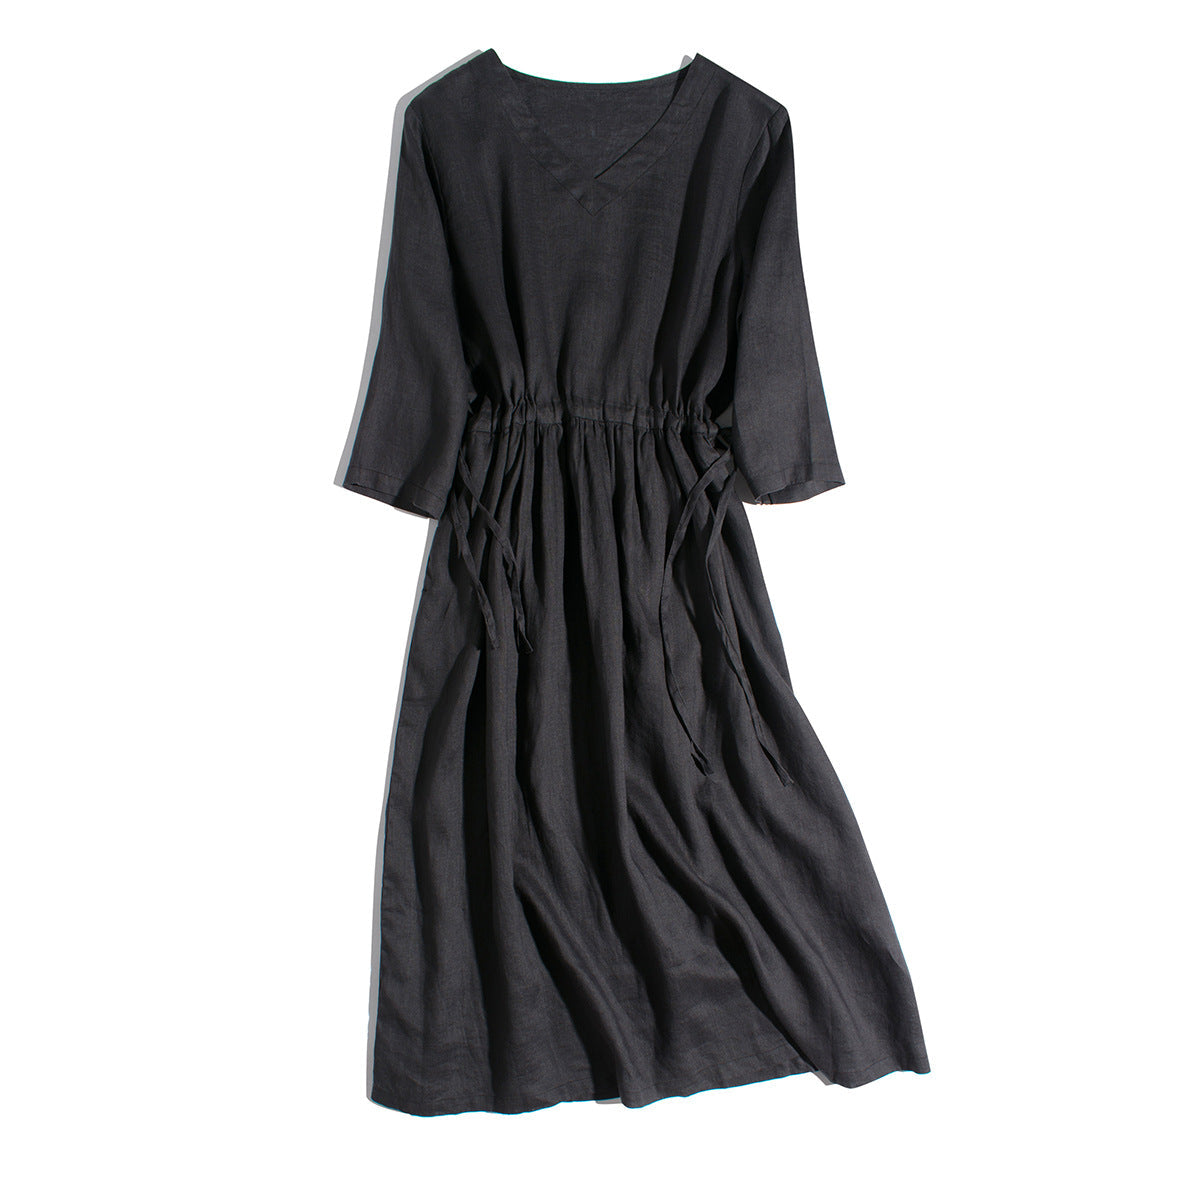 Earthy Essence 100% Linen Mini Dress | Hypoallergenic - Allergy Friendly - Naturally Free